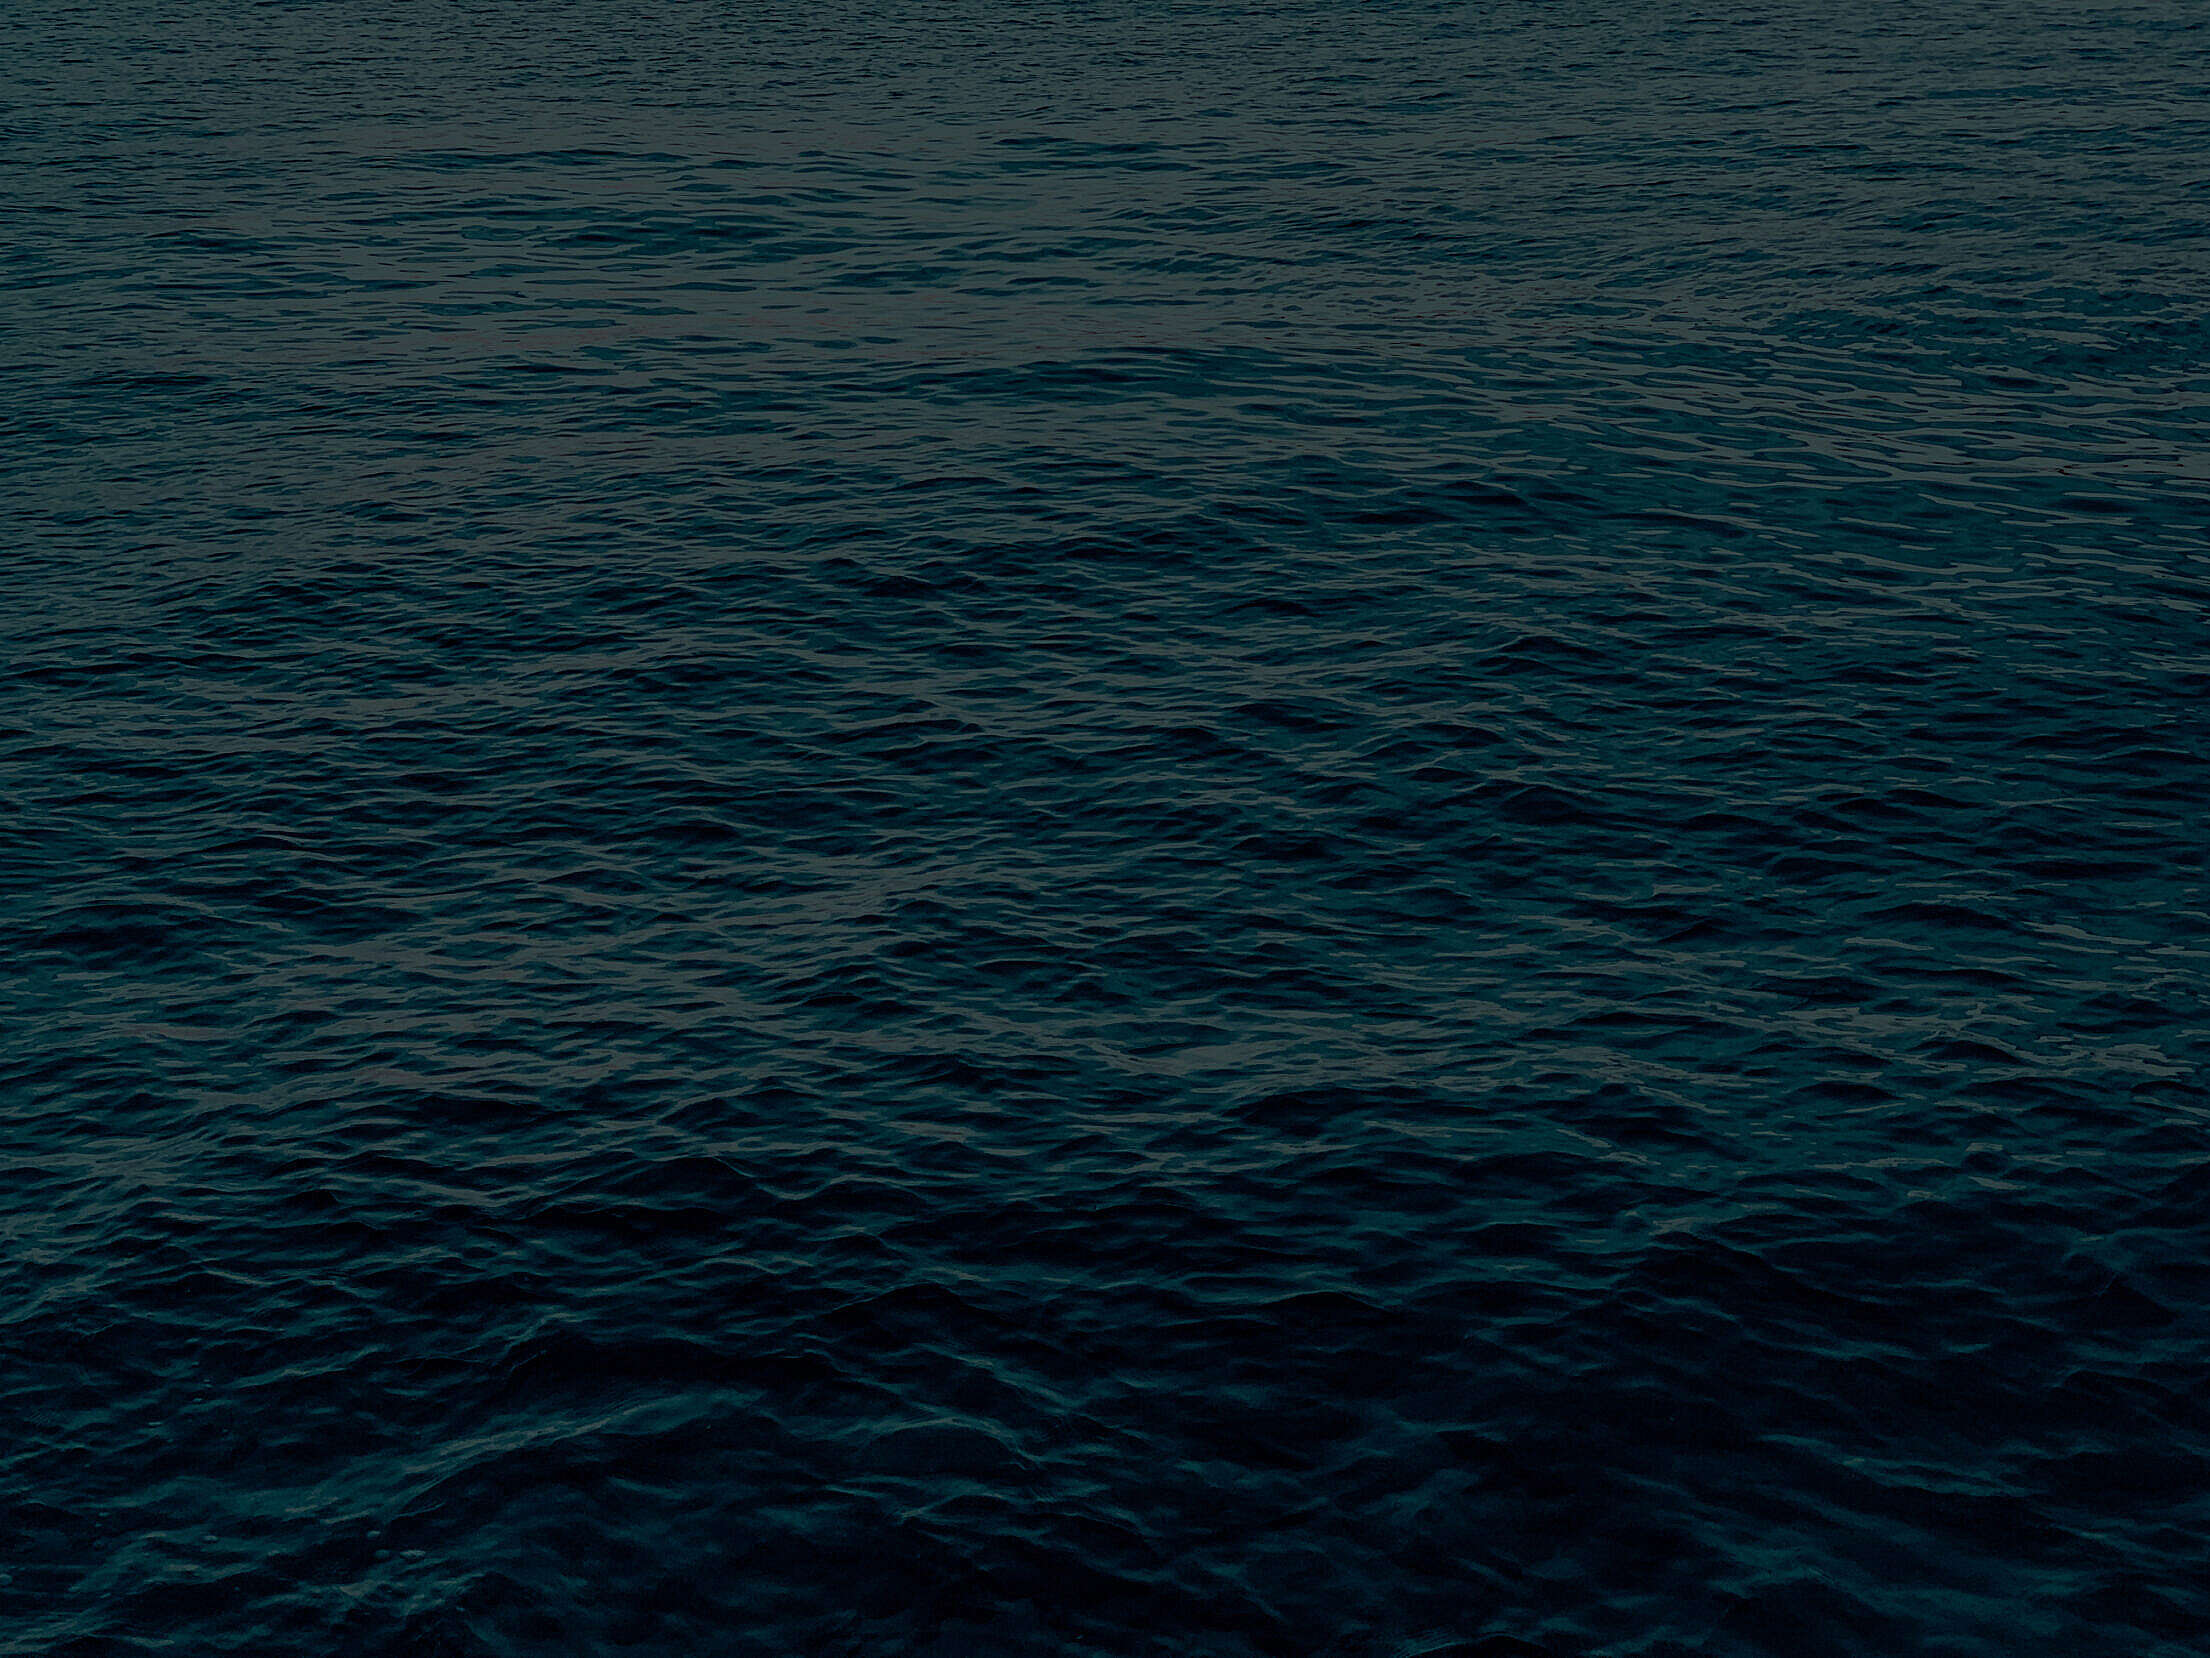 Calm Dark Blue Sea Background Free Stock Photo